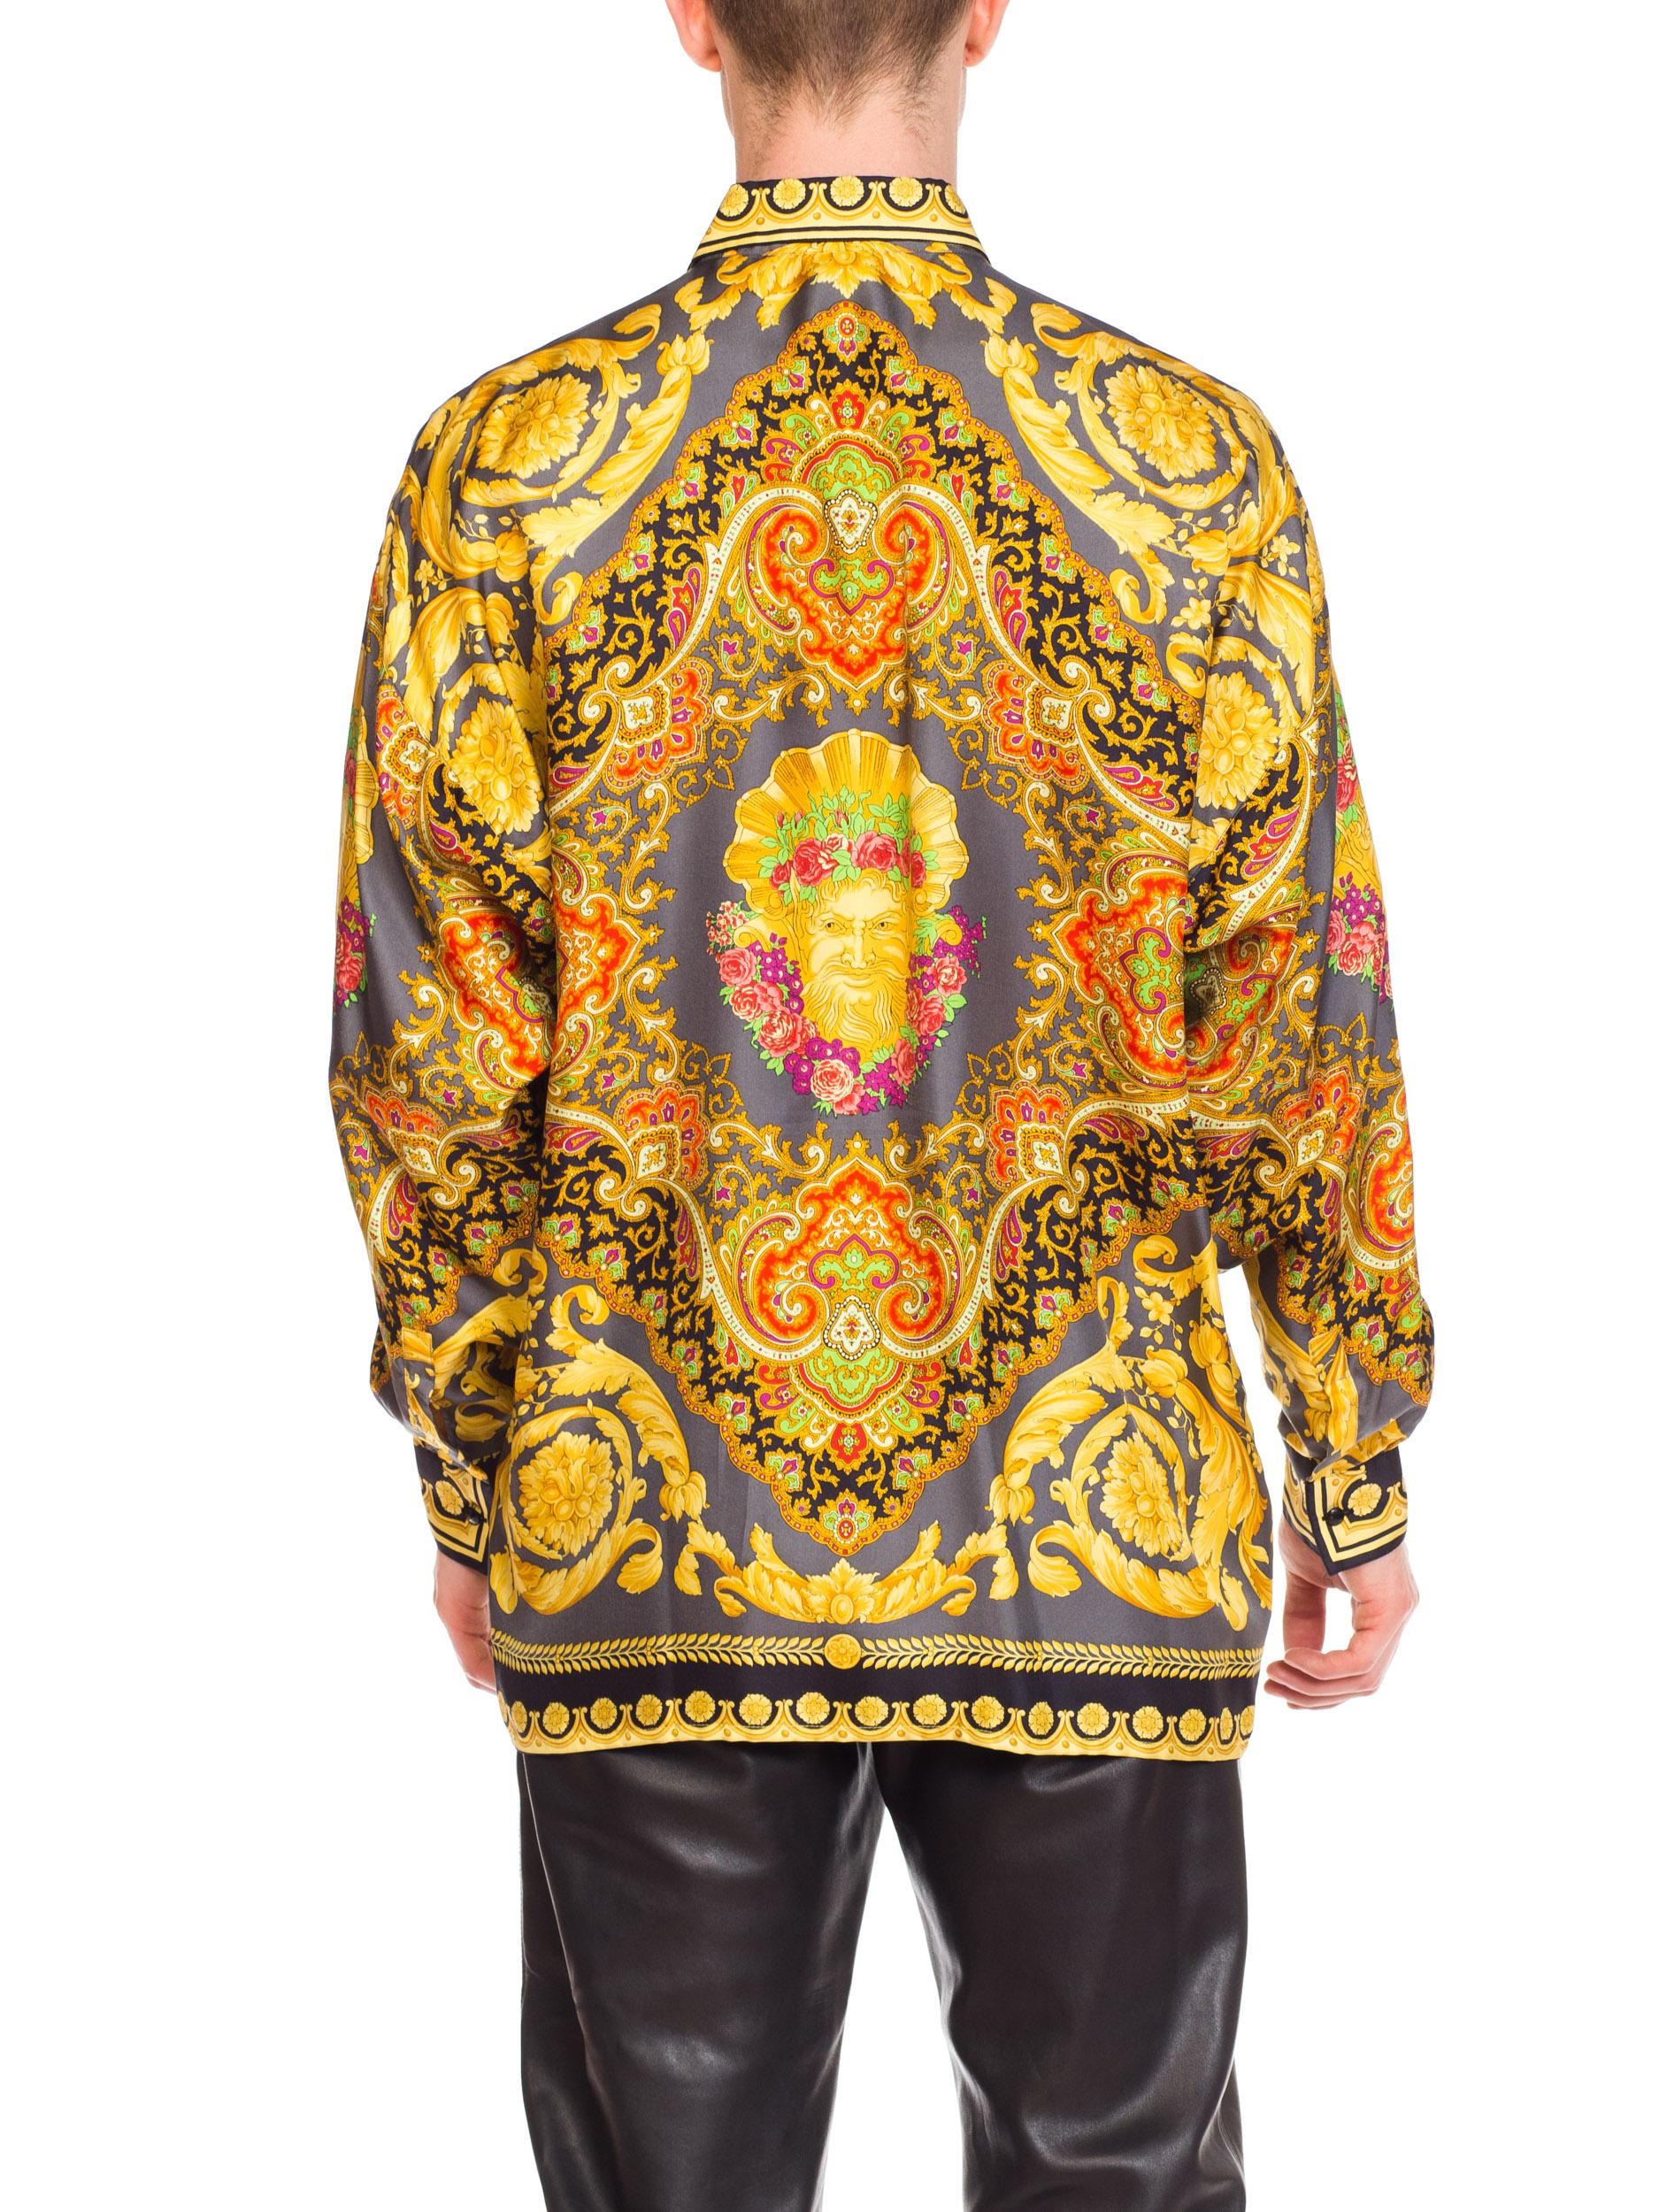 Gianni Versace Men's Baroque Silk Paisley Shirt, 1990s  1